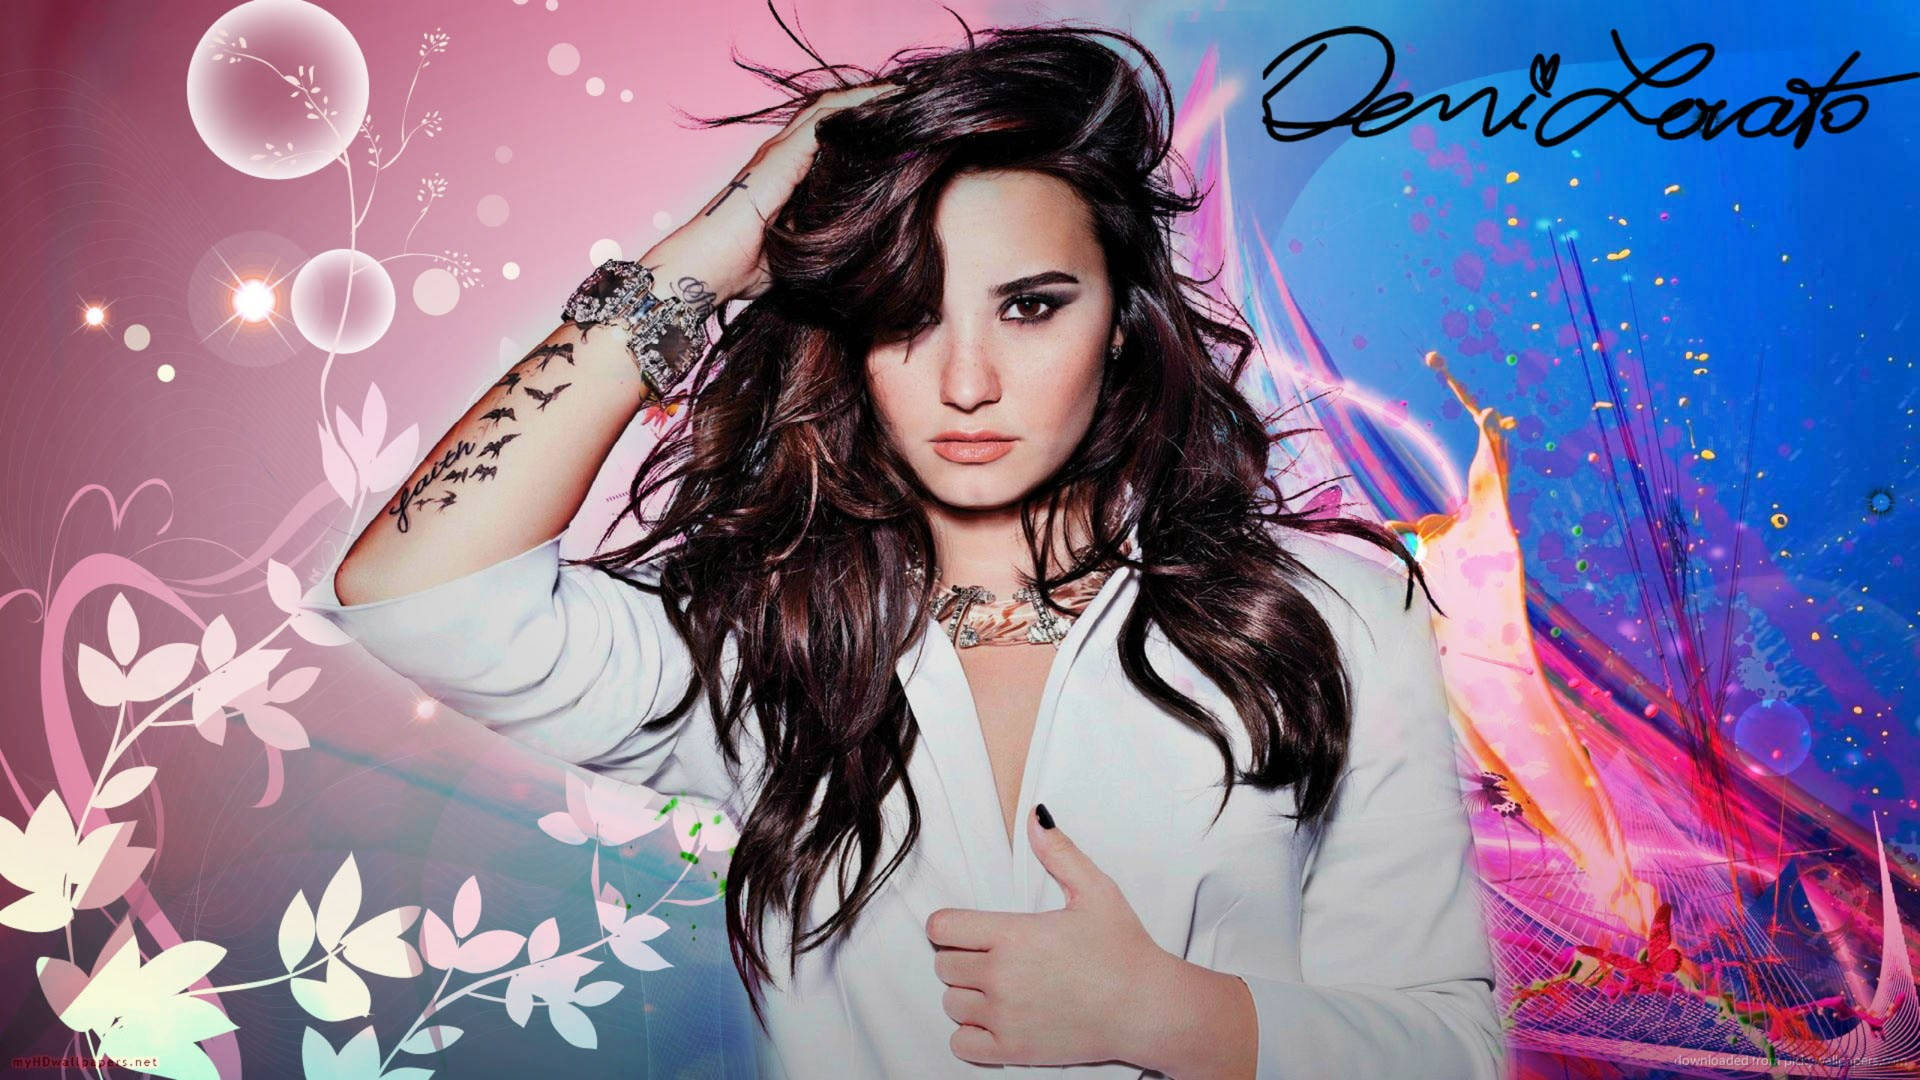 Demi Lovato Digital Art